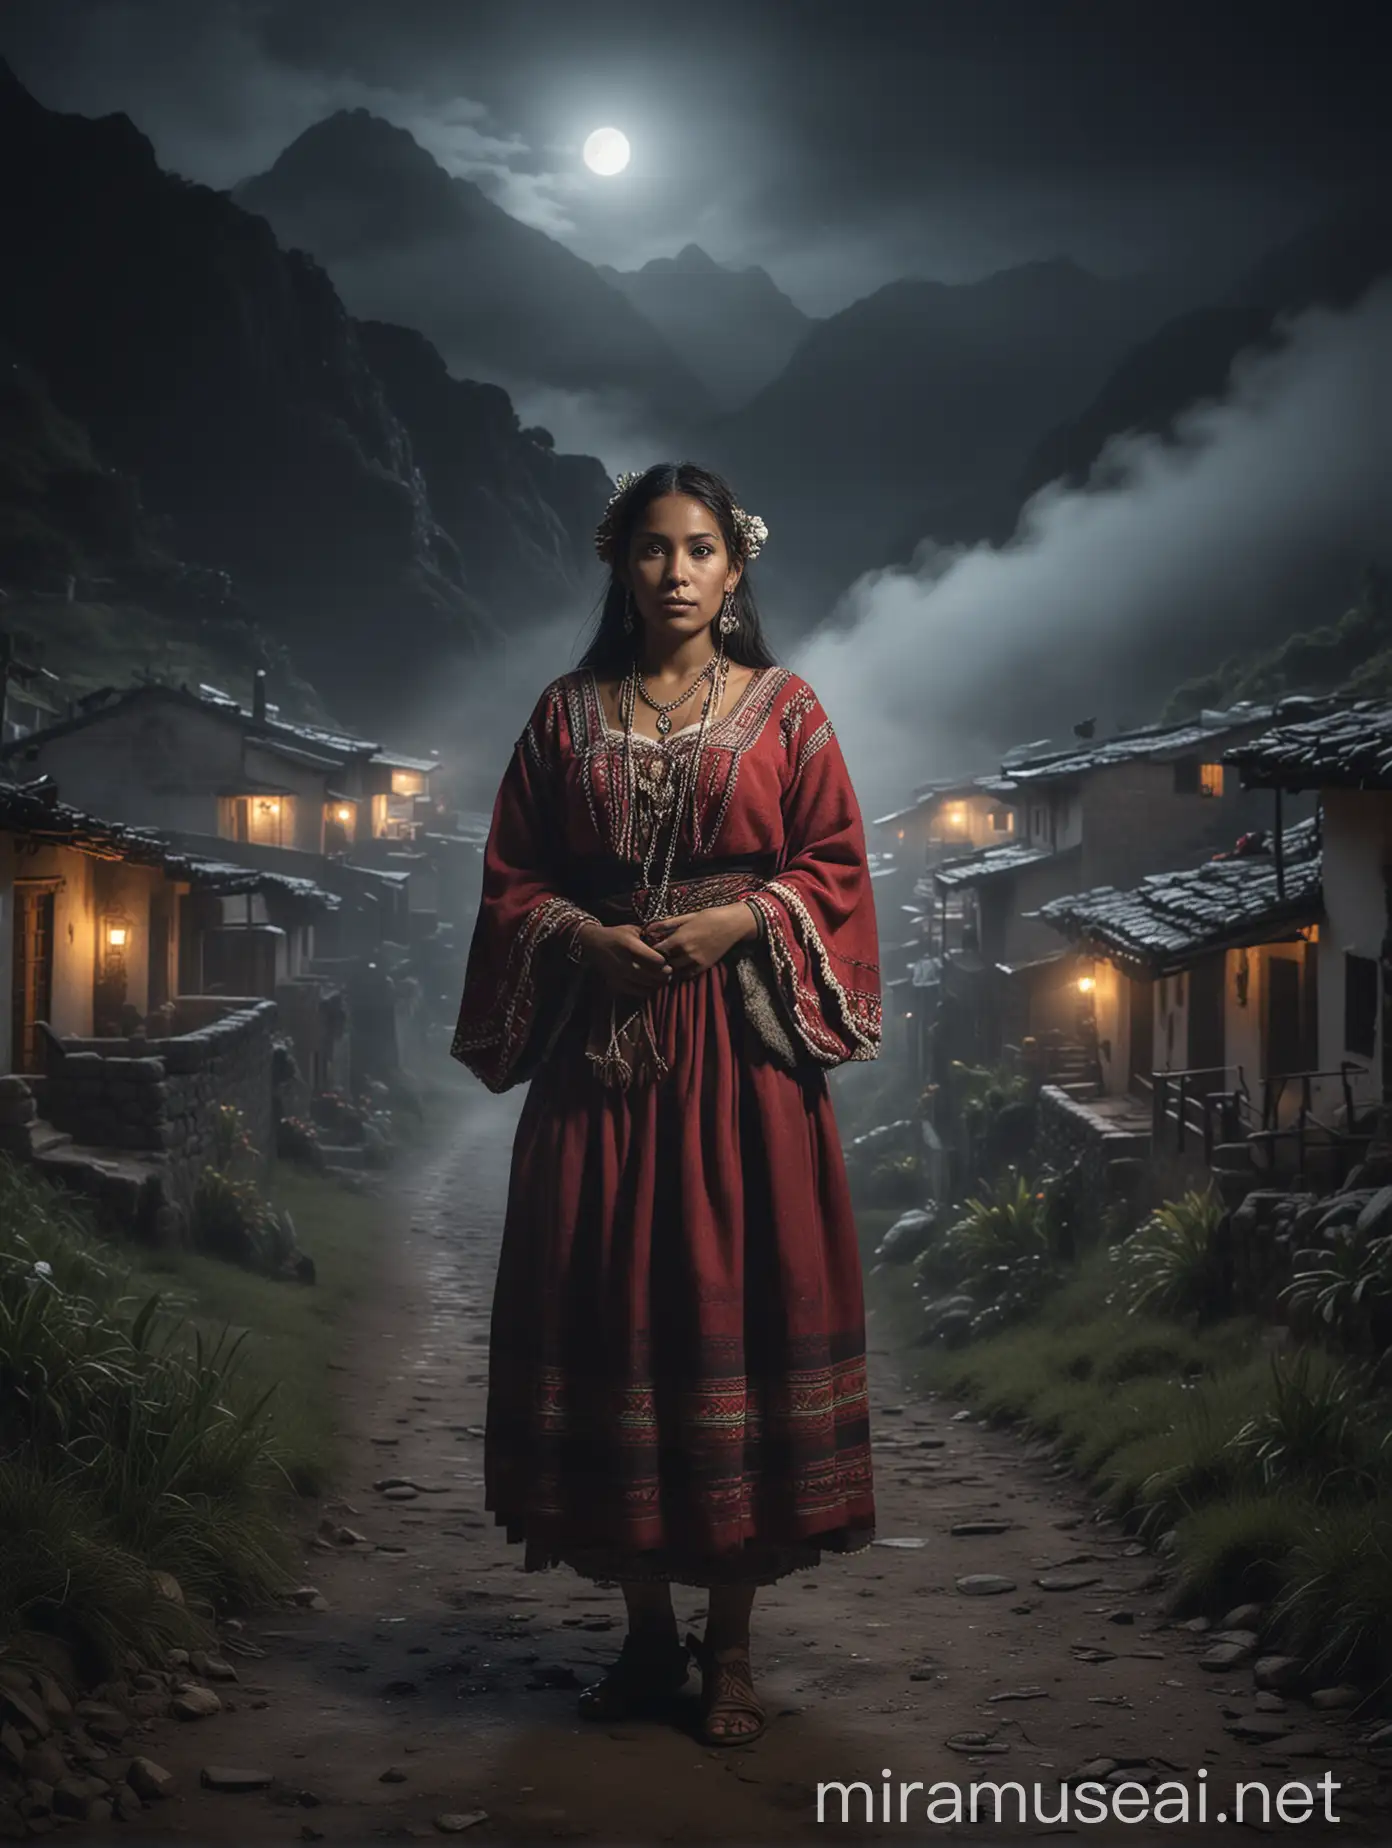 Regal Peruvian Woman in Mountain Village Moonlit Cinematic Atmosphere